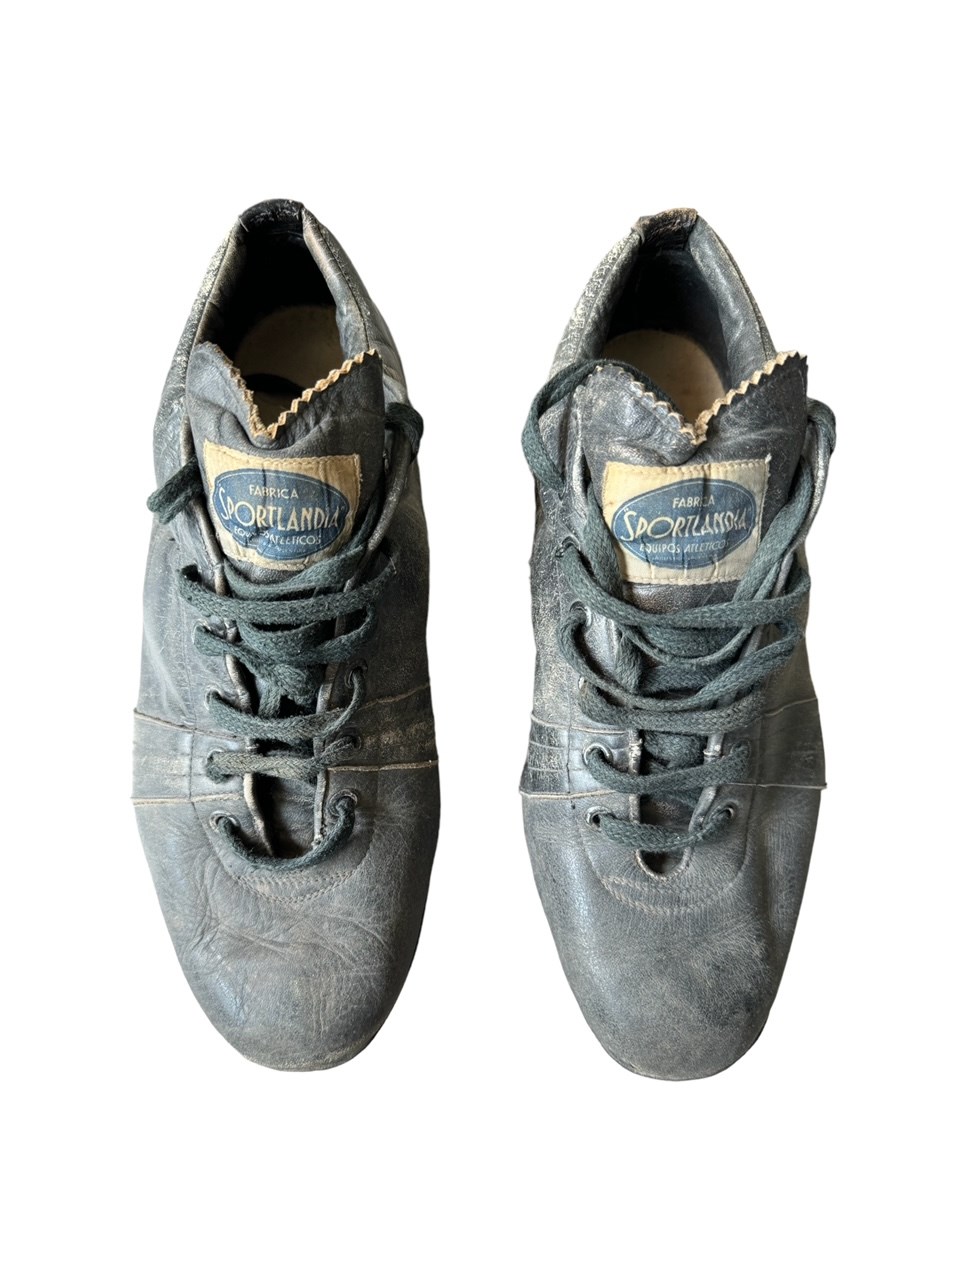 Antique childrens leather shoes - Gem